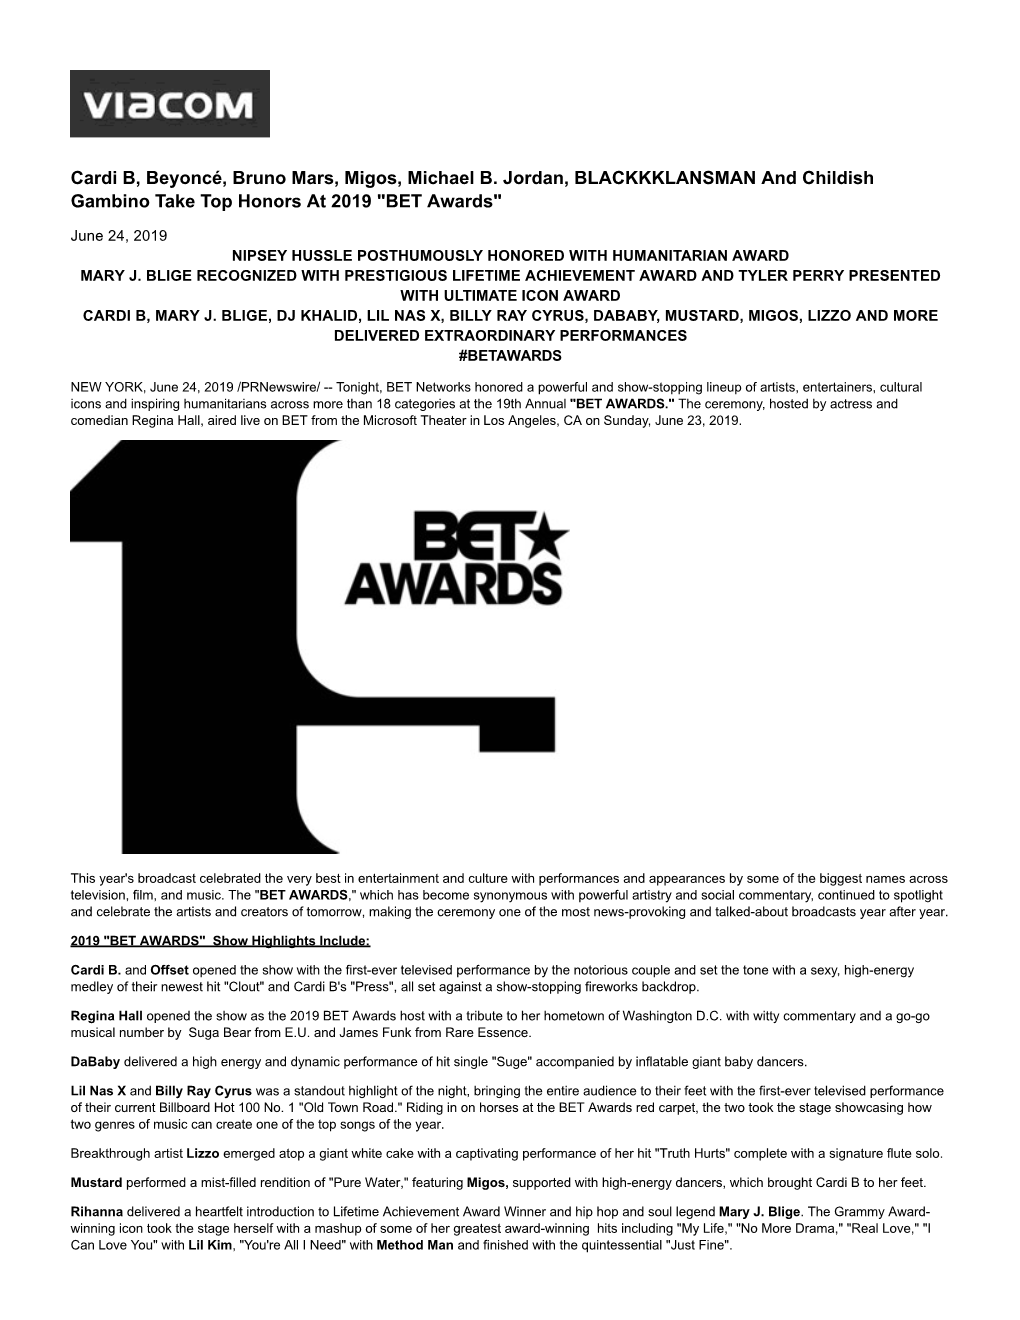 Cardi B, Beyoncé, Bruno Mars, Migos, Michael B. Jordan, BLACKKKLANSMAN and Childish Gambino Take Top Honors at 2019 "BET Awards"